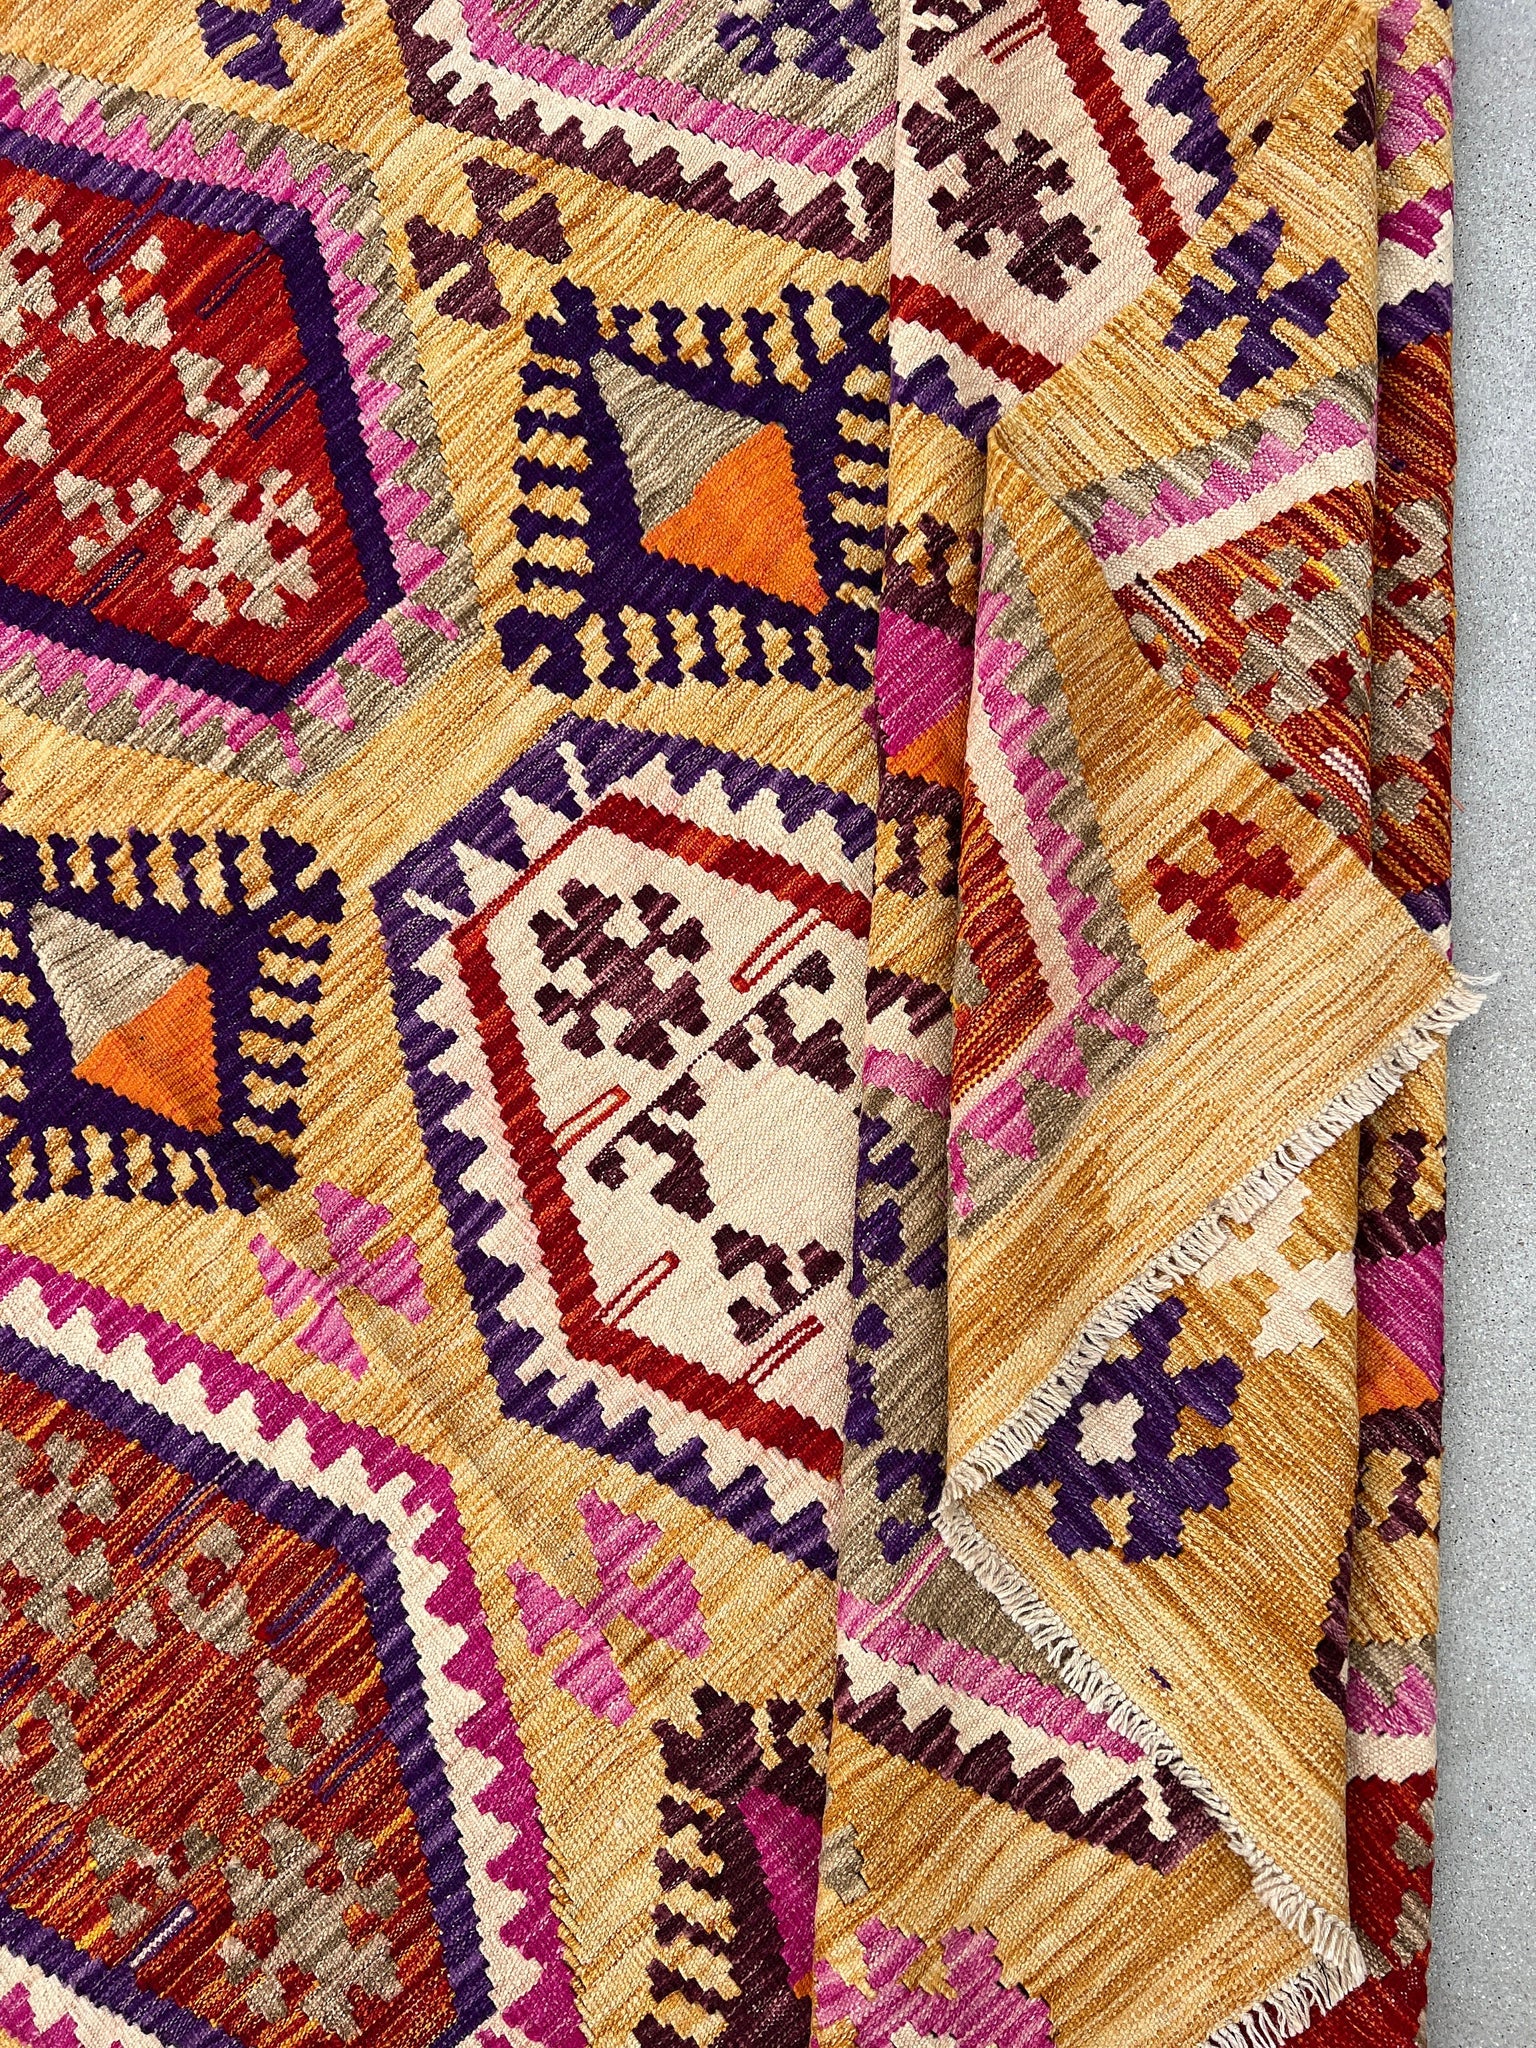 7x10 Handmade Afghan Kilim Rug | Golden Yellow Saffron Orange Pink Indigo Purple Tan Brown Wine Red | Flatweave Wool Persian Outdoor Patio